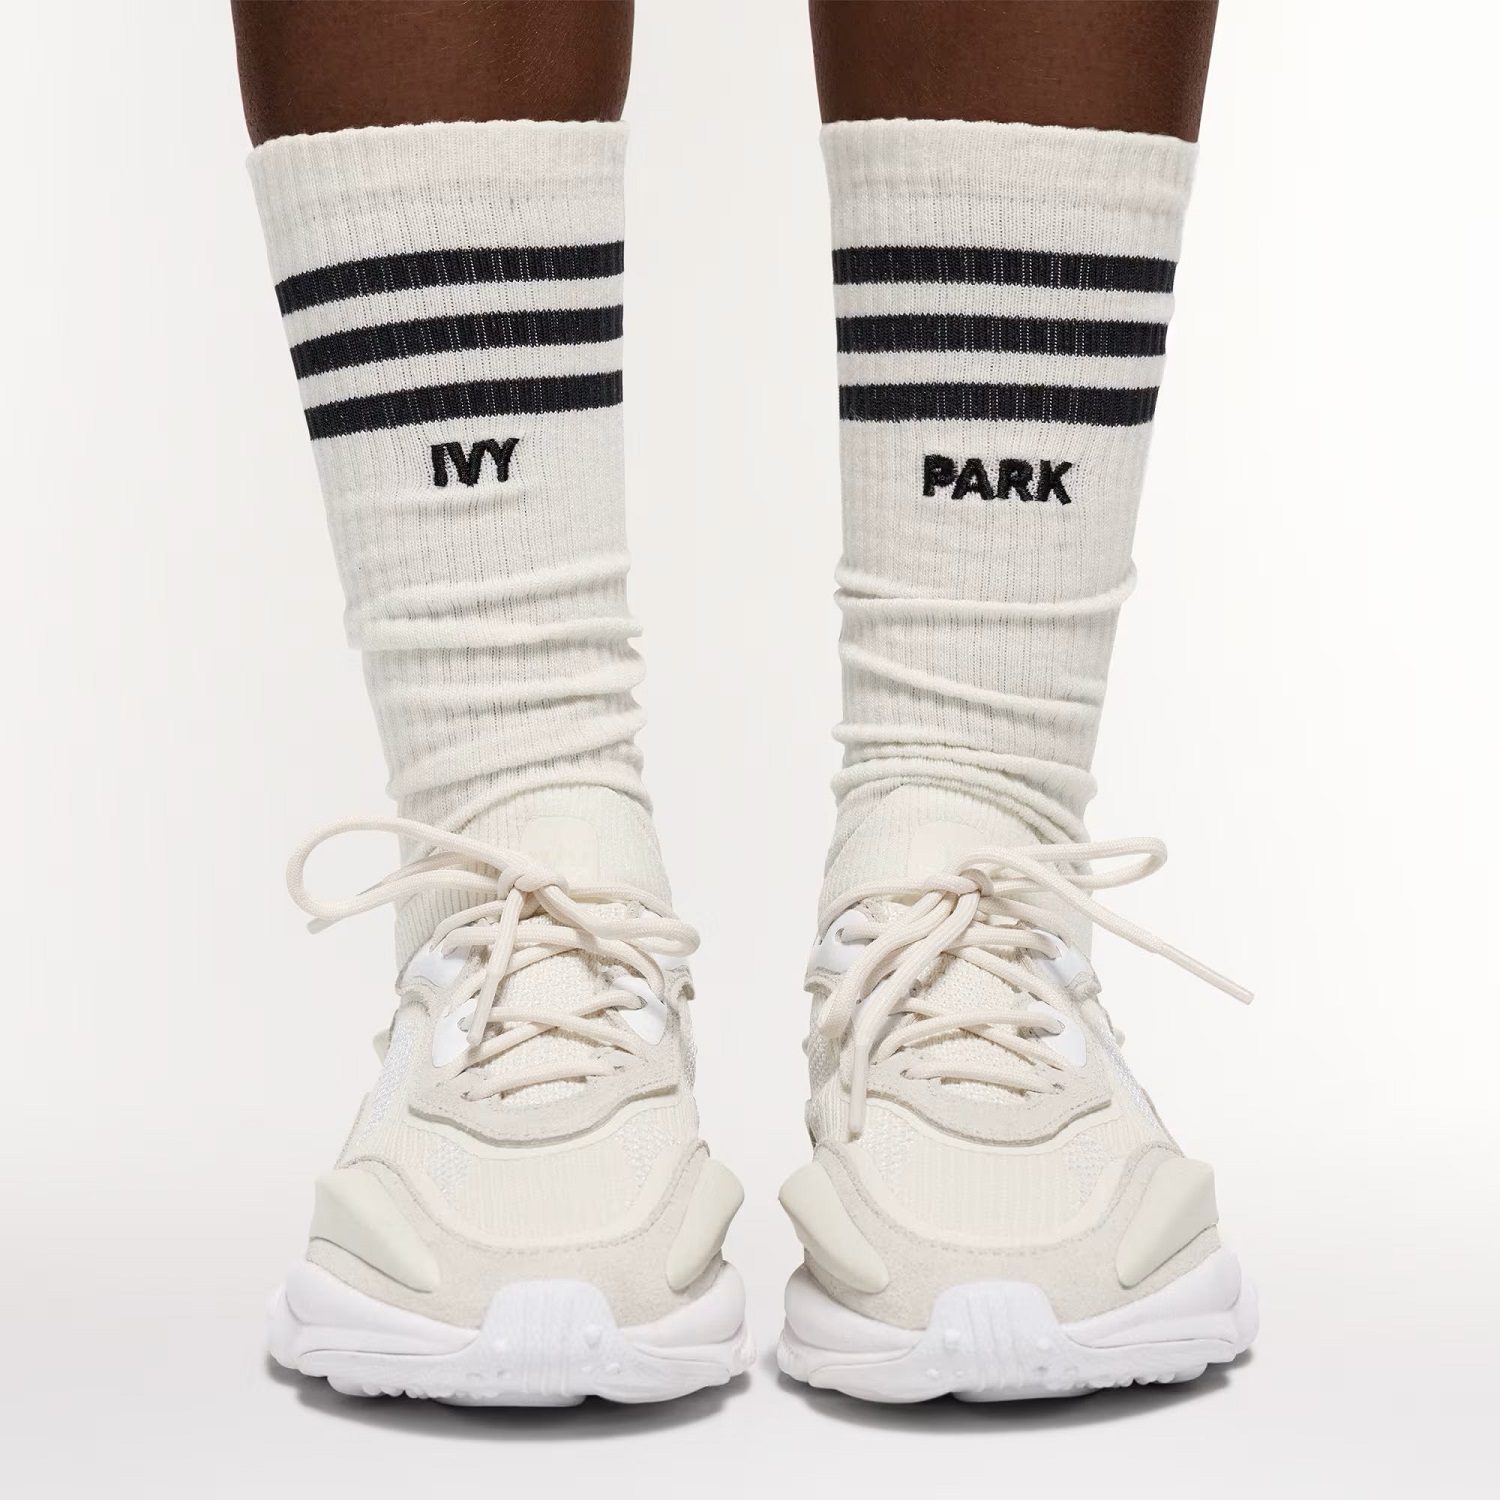 Adidas x Ivy Park announce release date for new Noir range